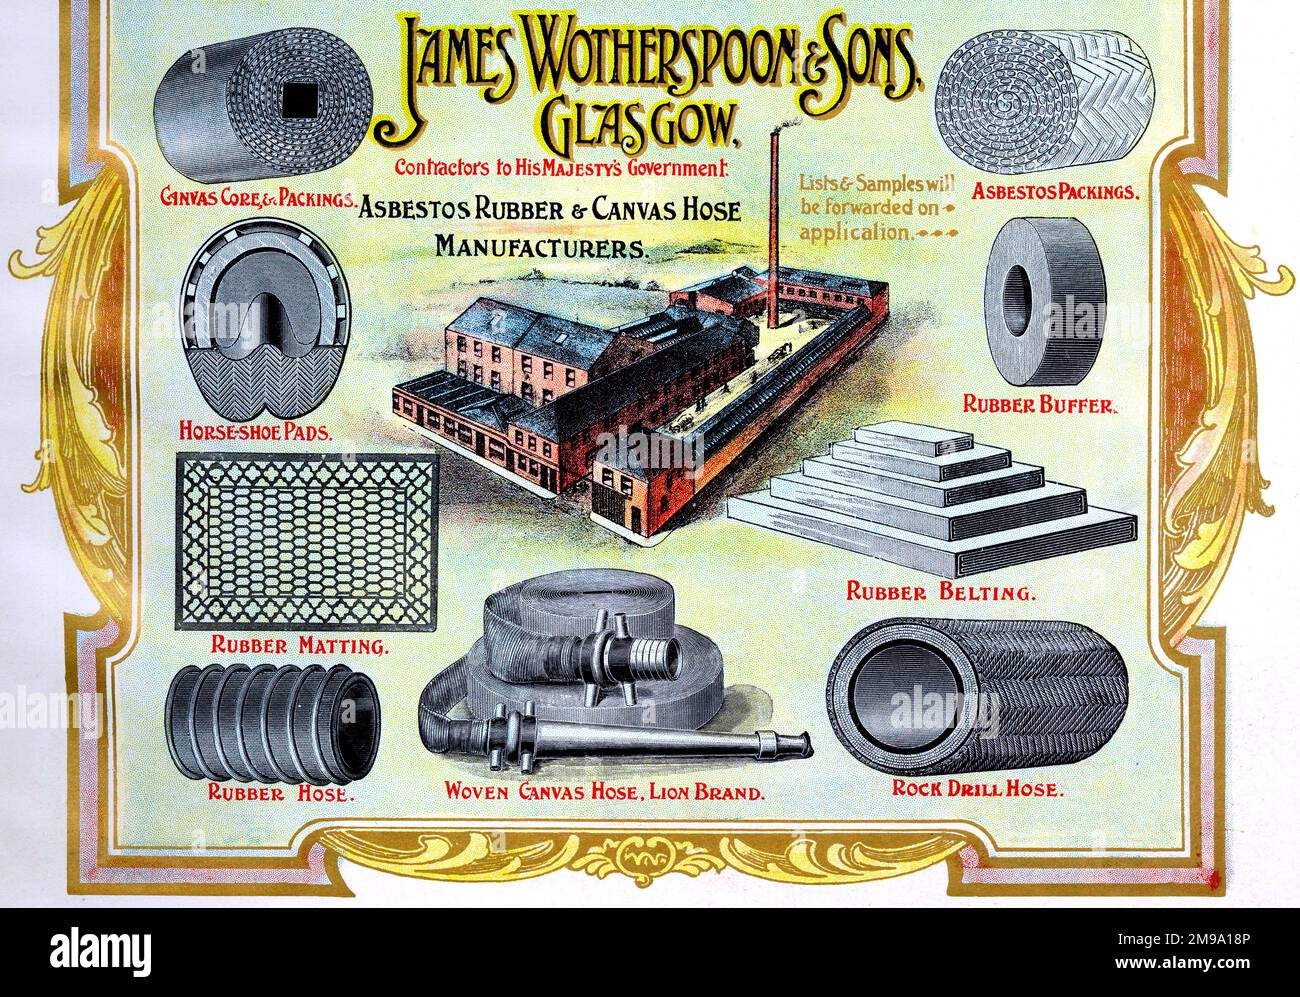 James Wotherspoon, Produttori di gomma amianto e canvas, Glasgow - souvenir industriale scozzese 1905. Foto Stock